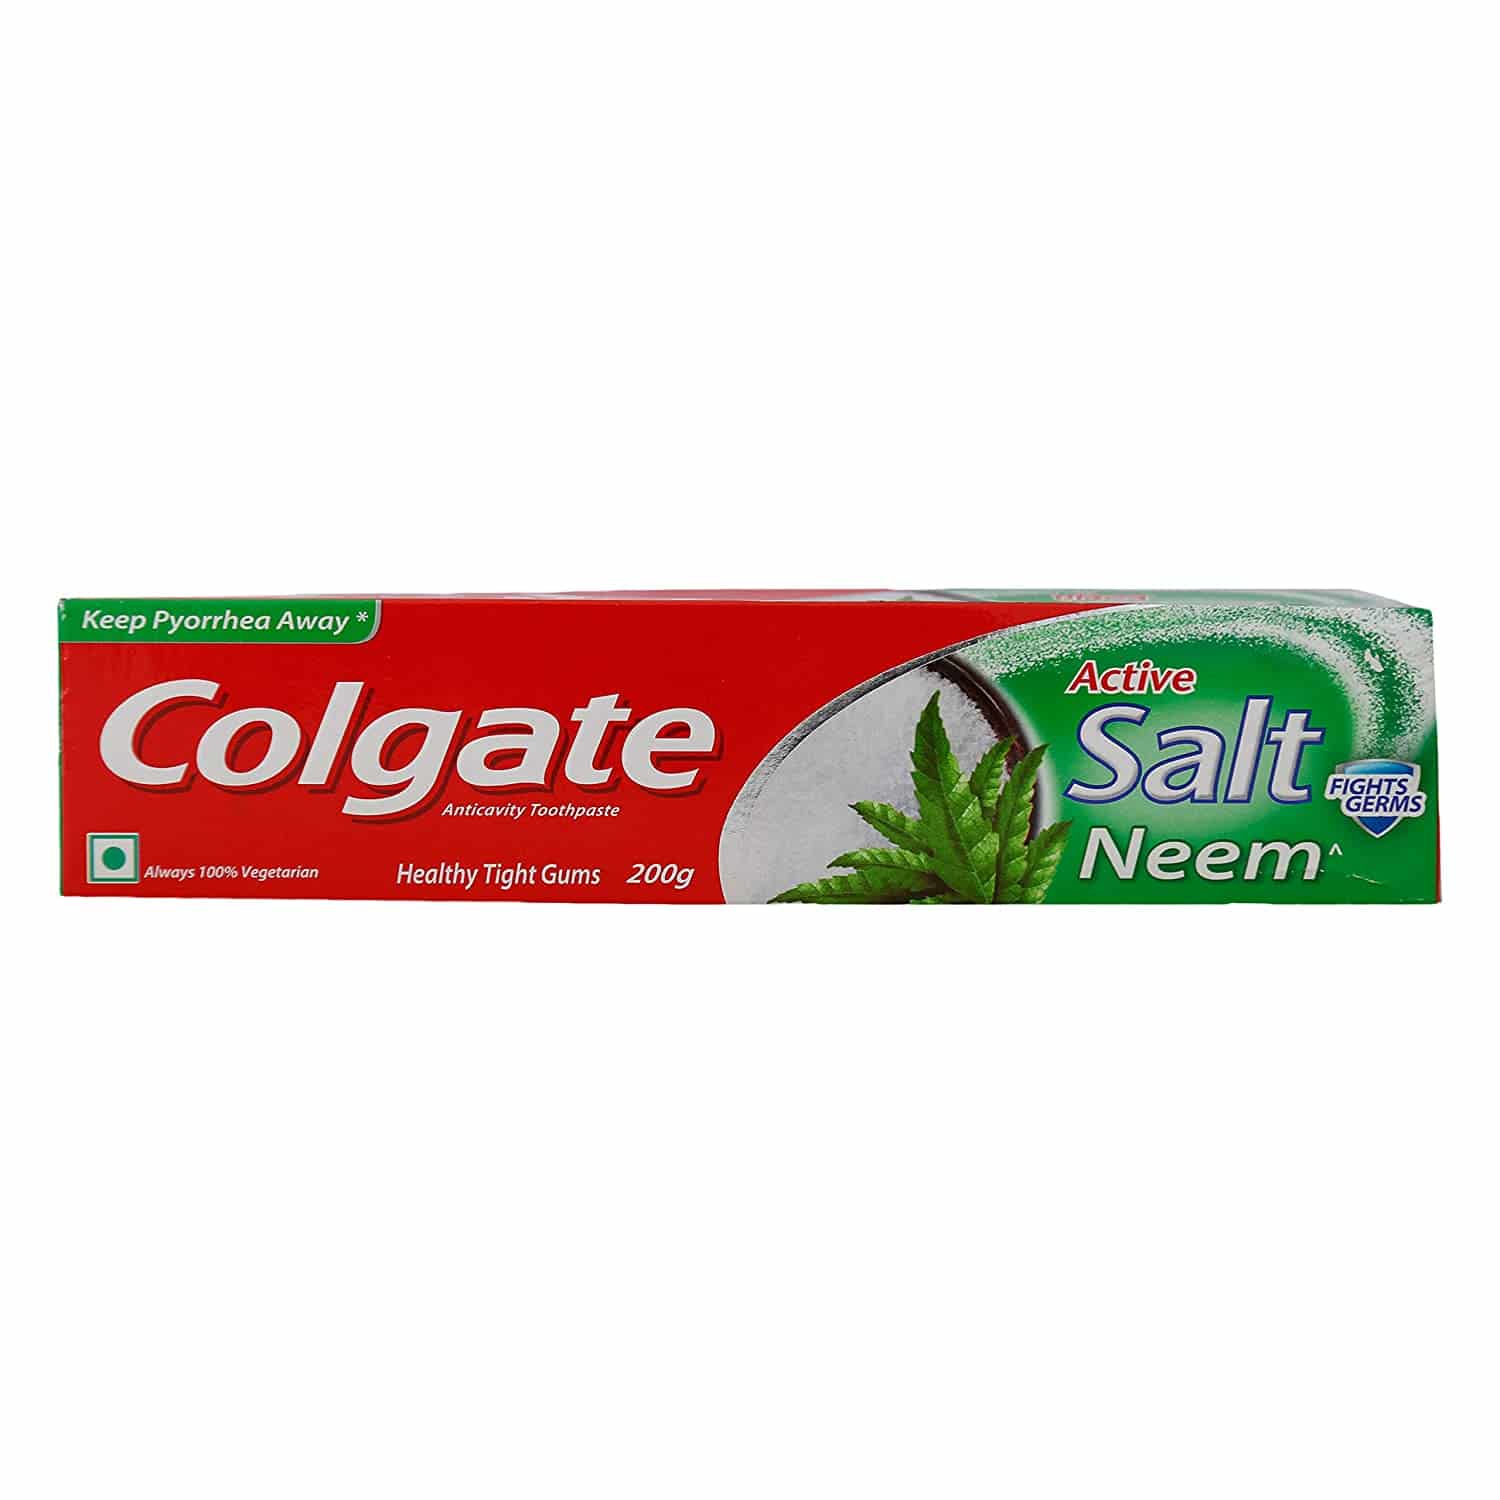 Colgate Active Salt Neem Toothpaste 